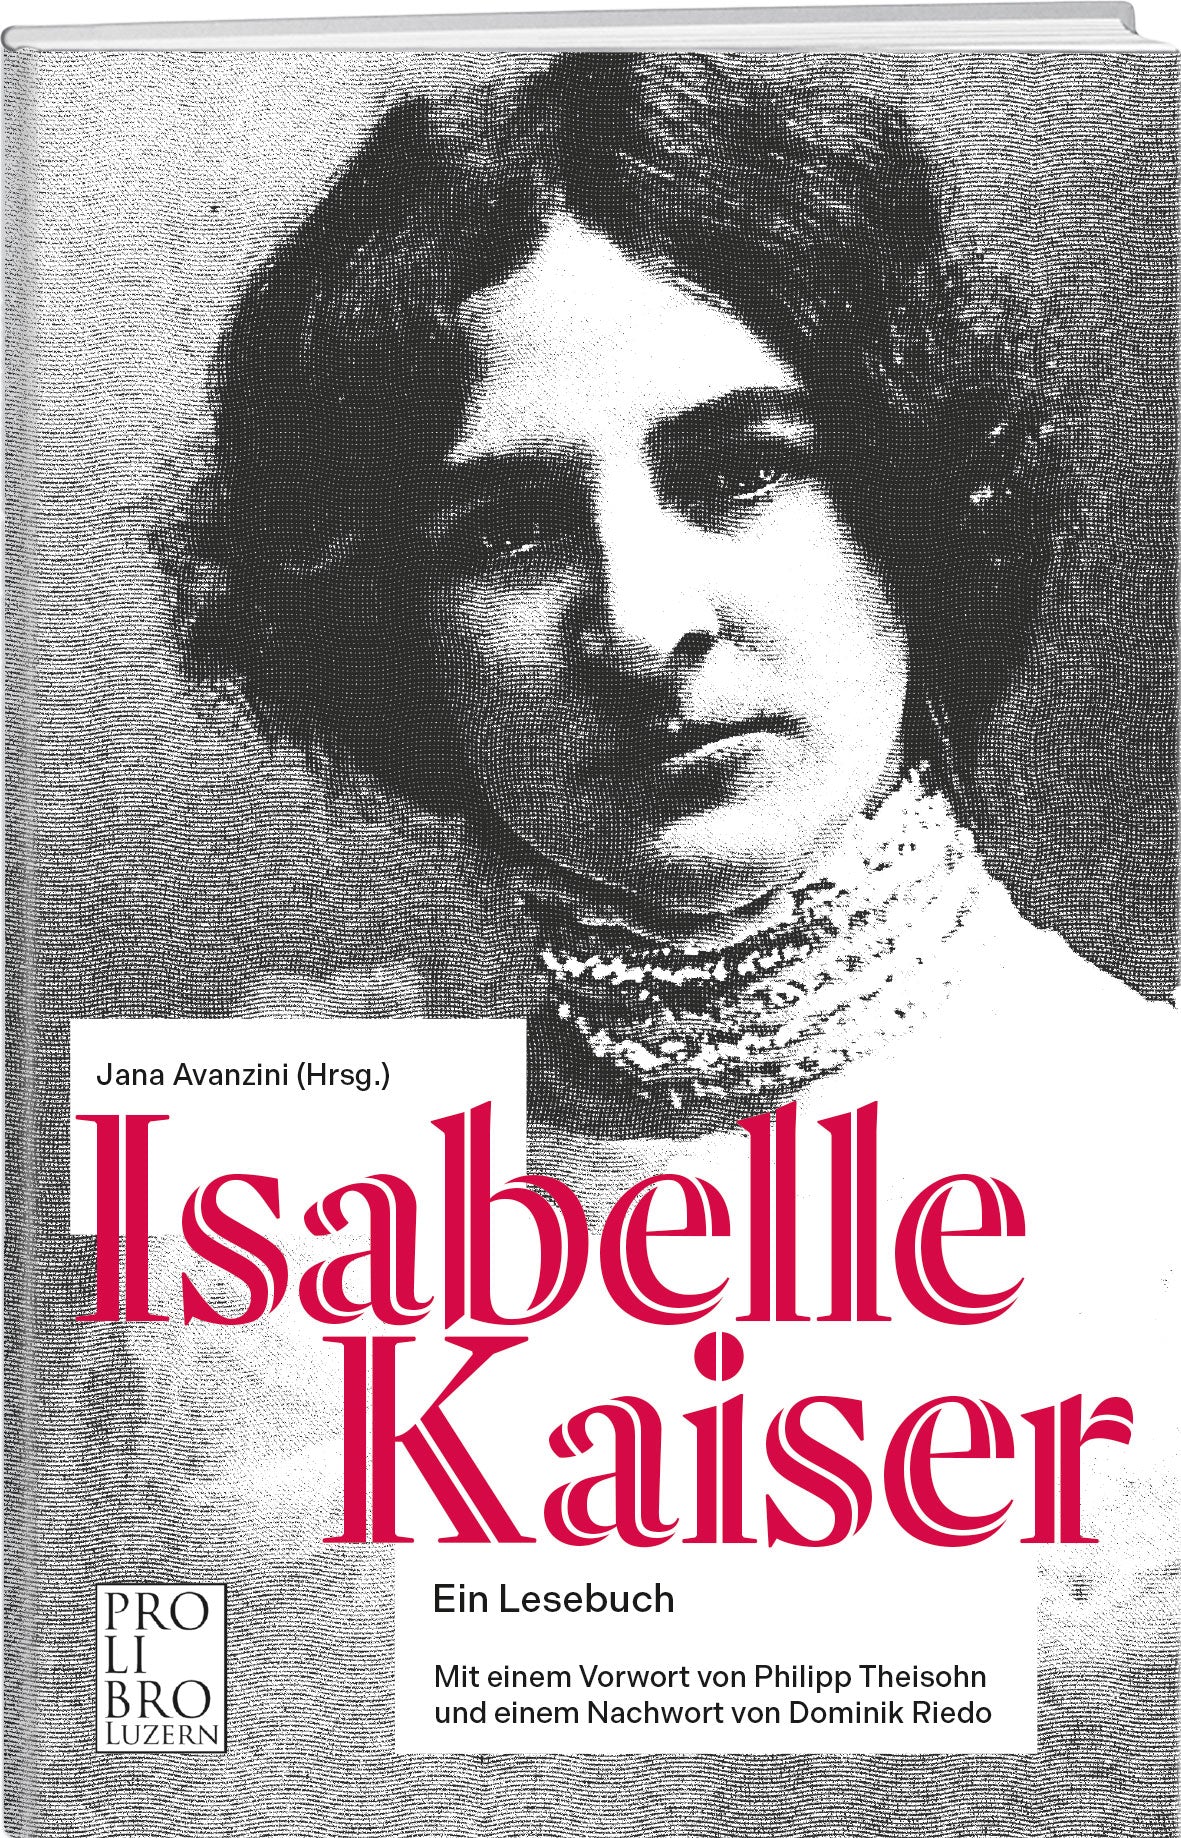 Jana Avanzini | Isabelle Kaiser. Ein Lesebuch - prolibro.ch